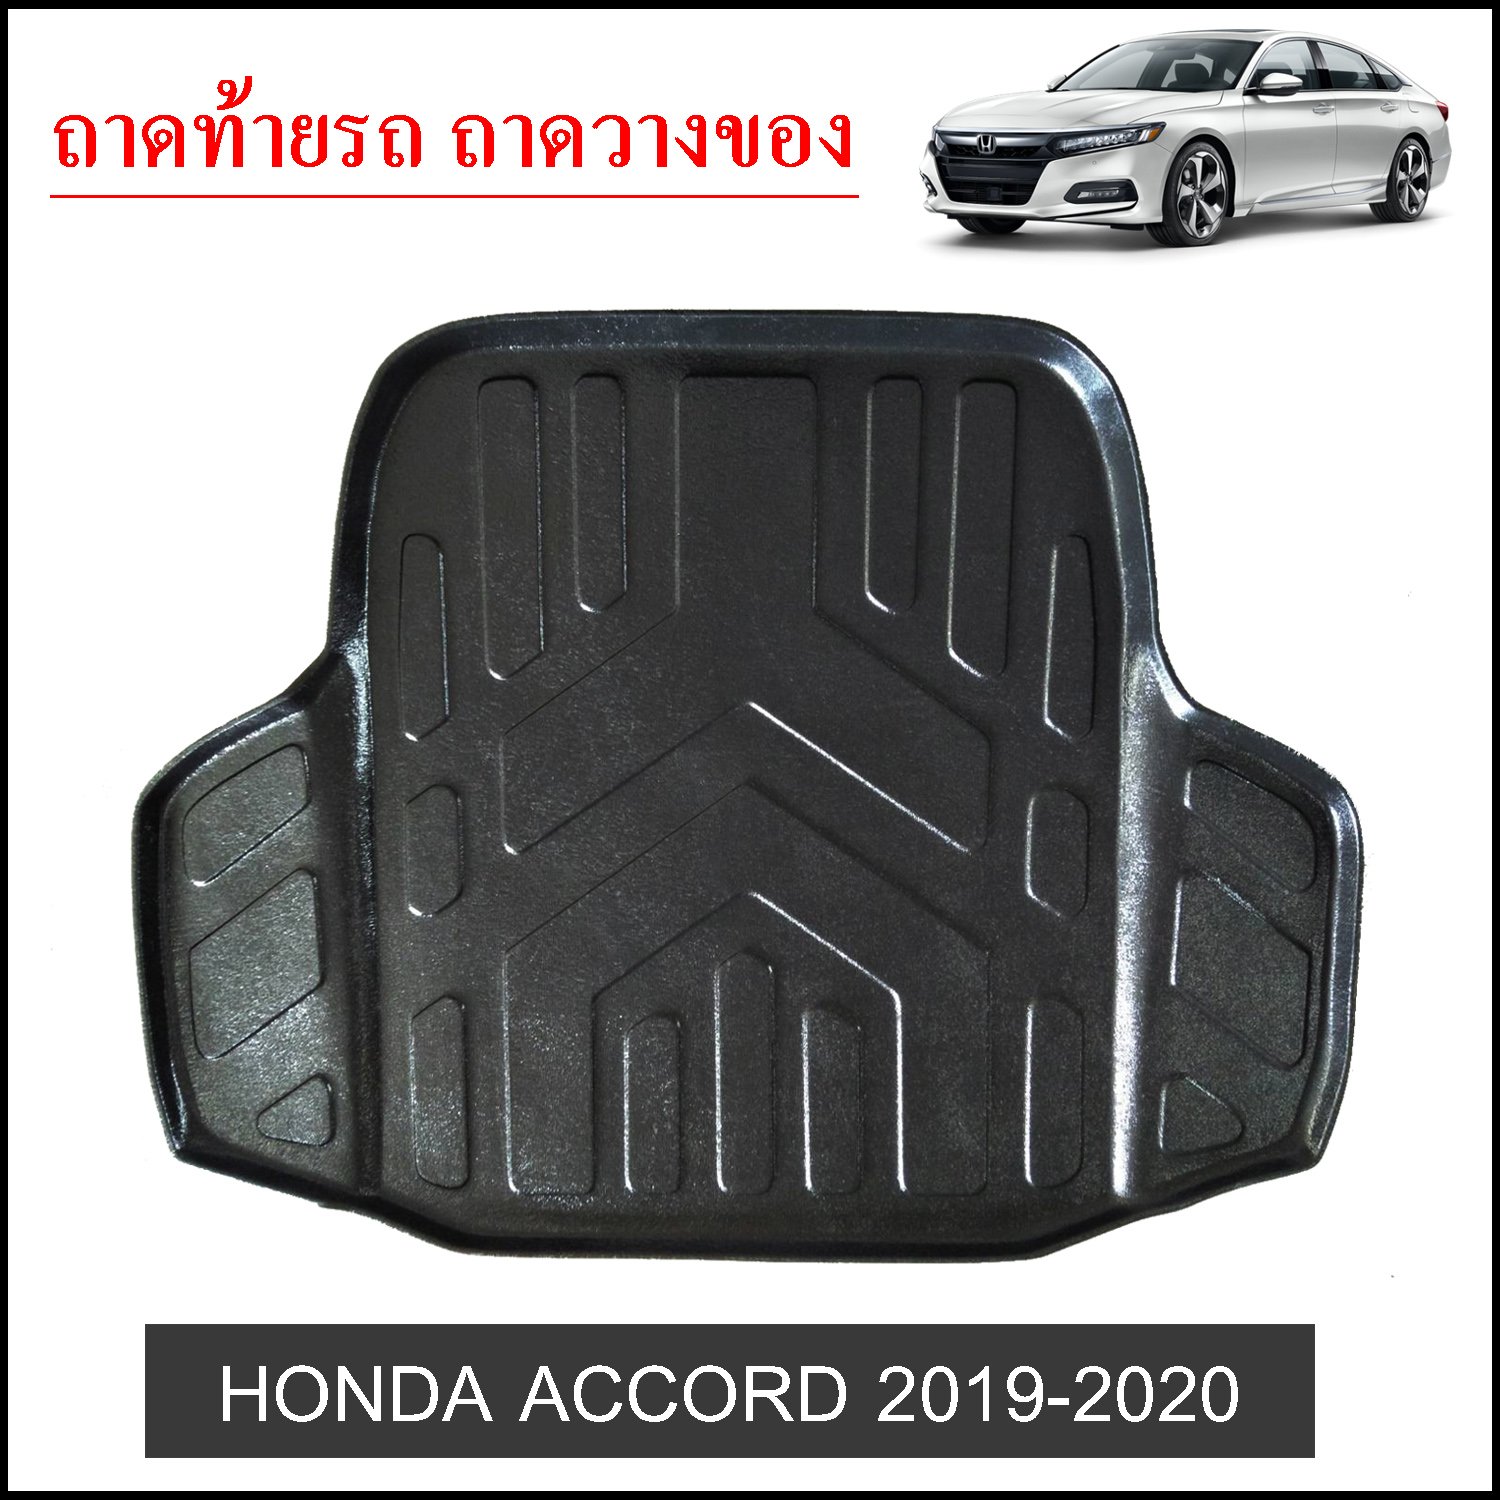 Honda Accord 2019-2020